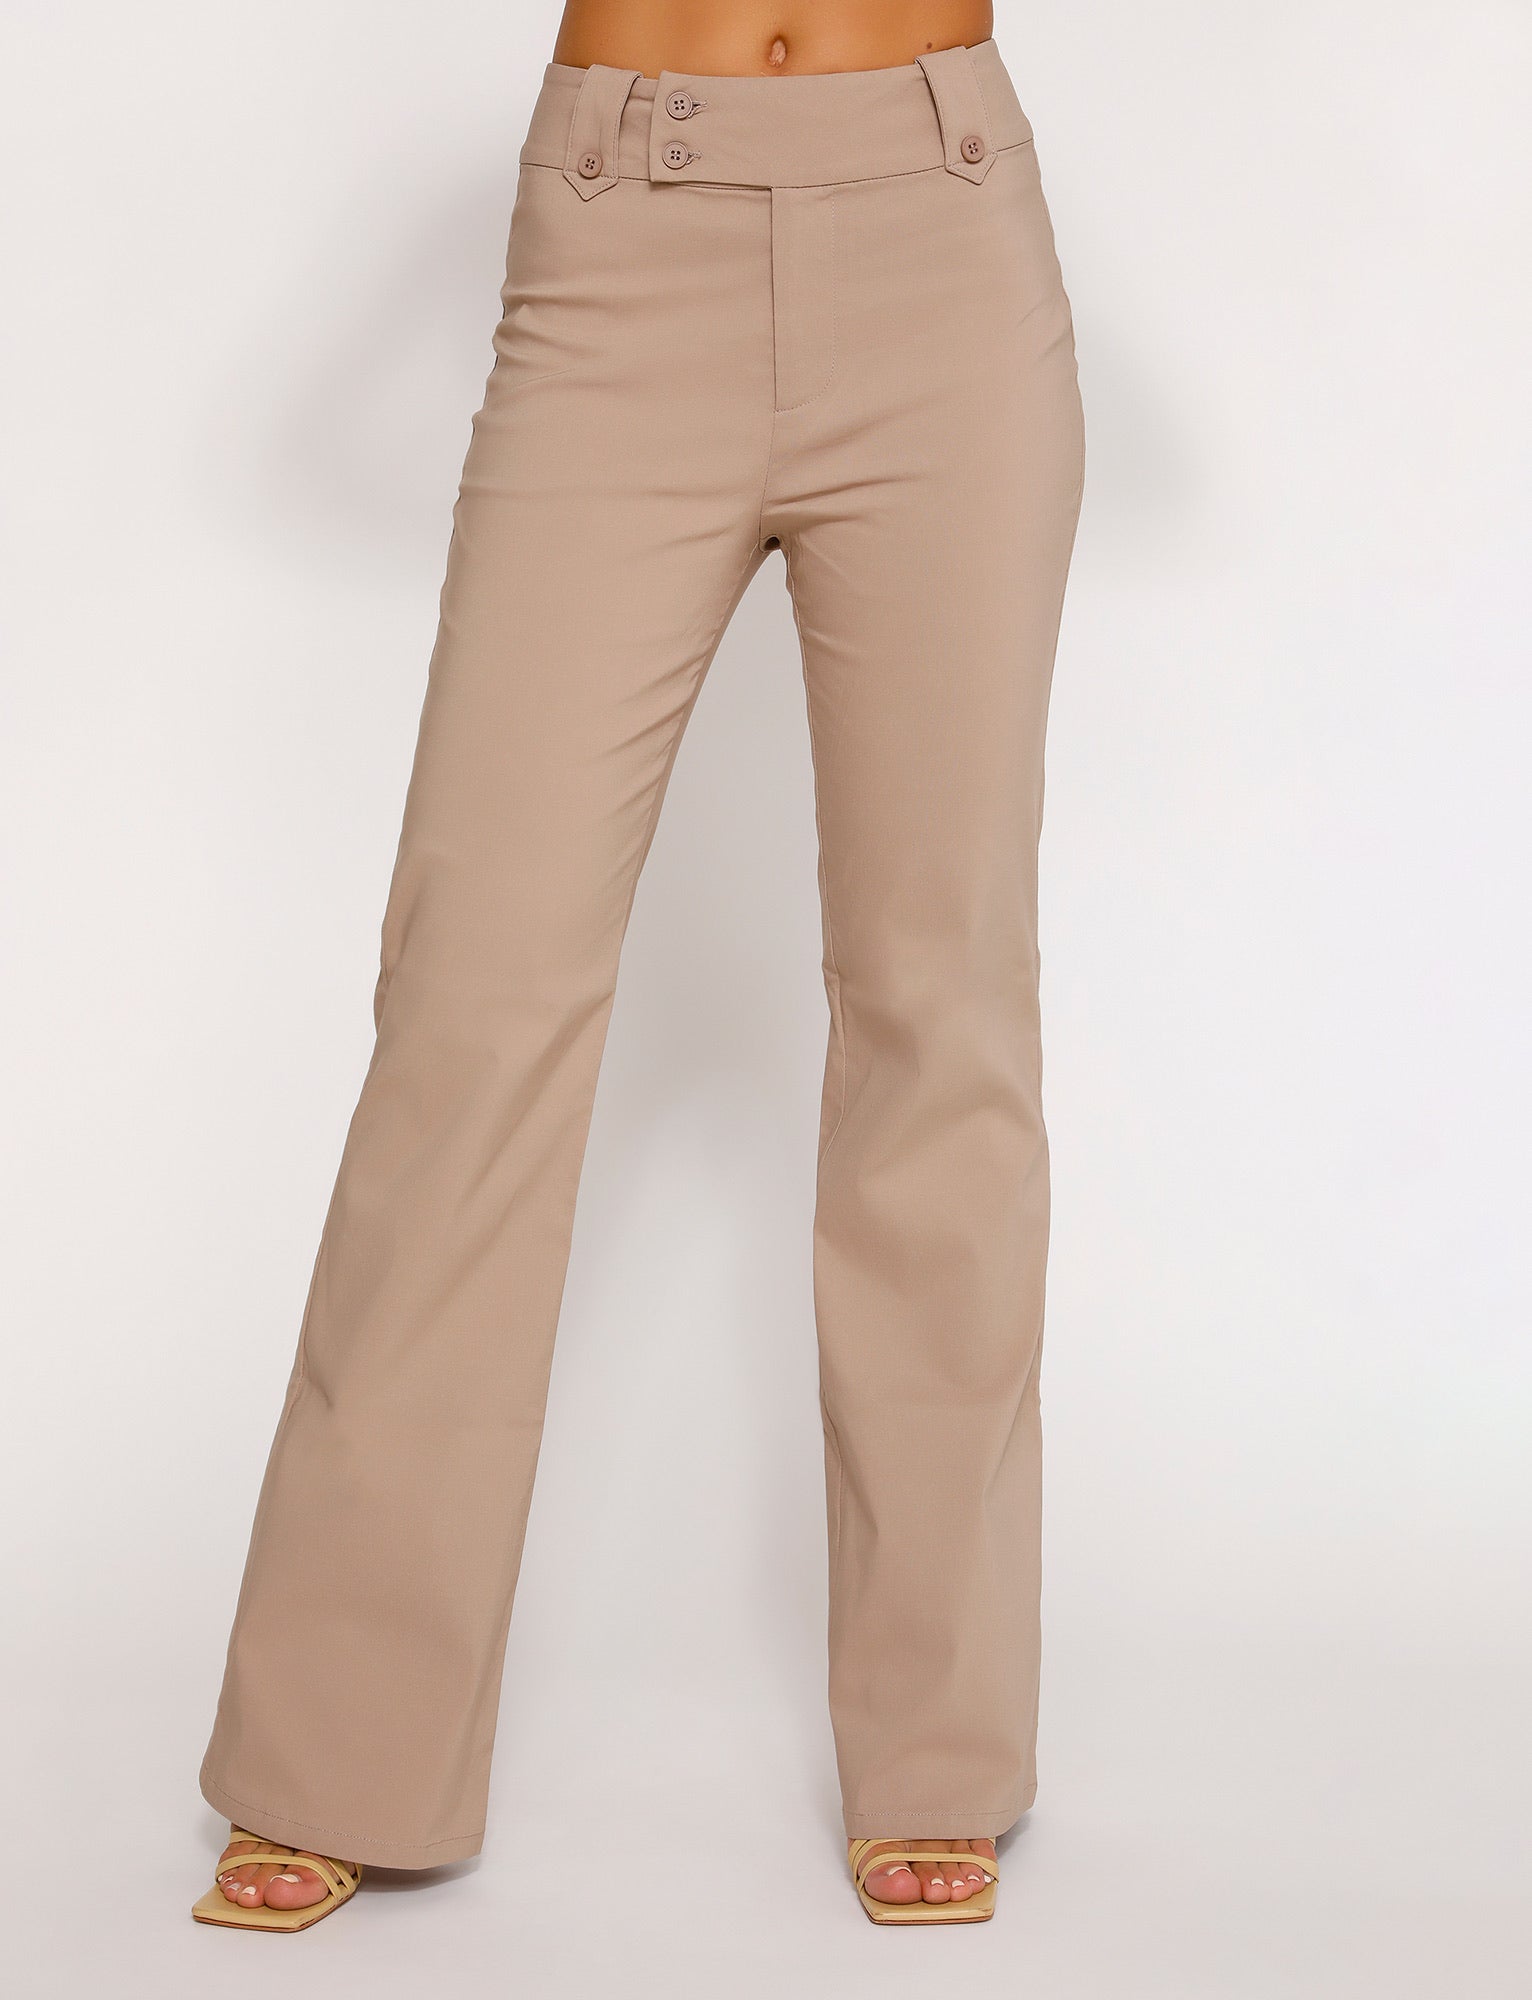 JWZUY Casual Solid High Waist Tie Front Wide Leg with Pockets Office Flowy Pants  Beige S - Walmart.com